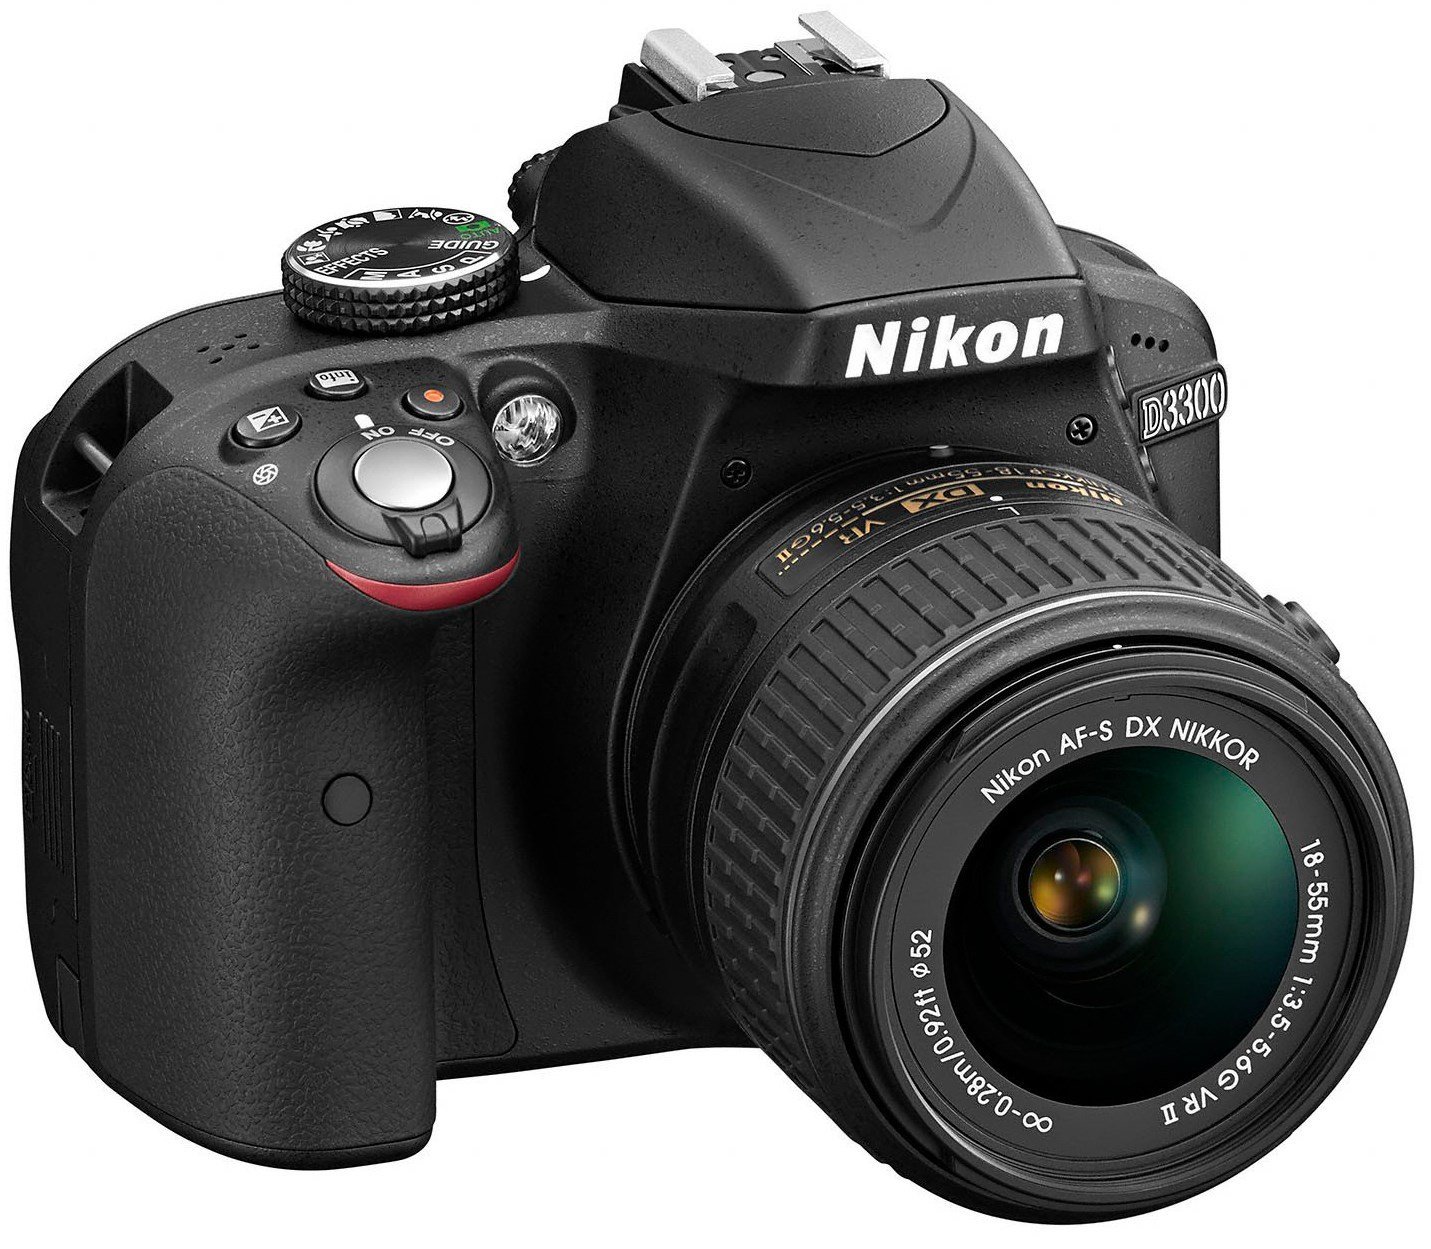 Nikon D3300 Digital SLR Camera with 18-55mm Lens